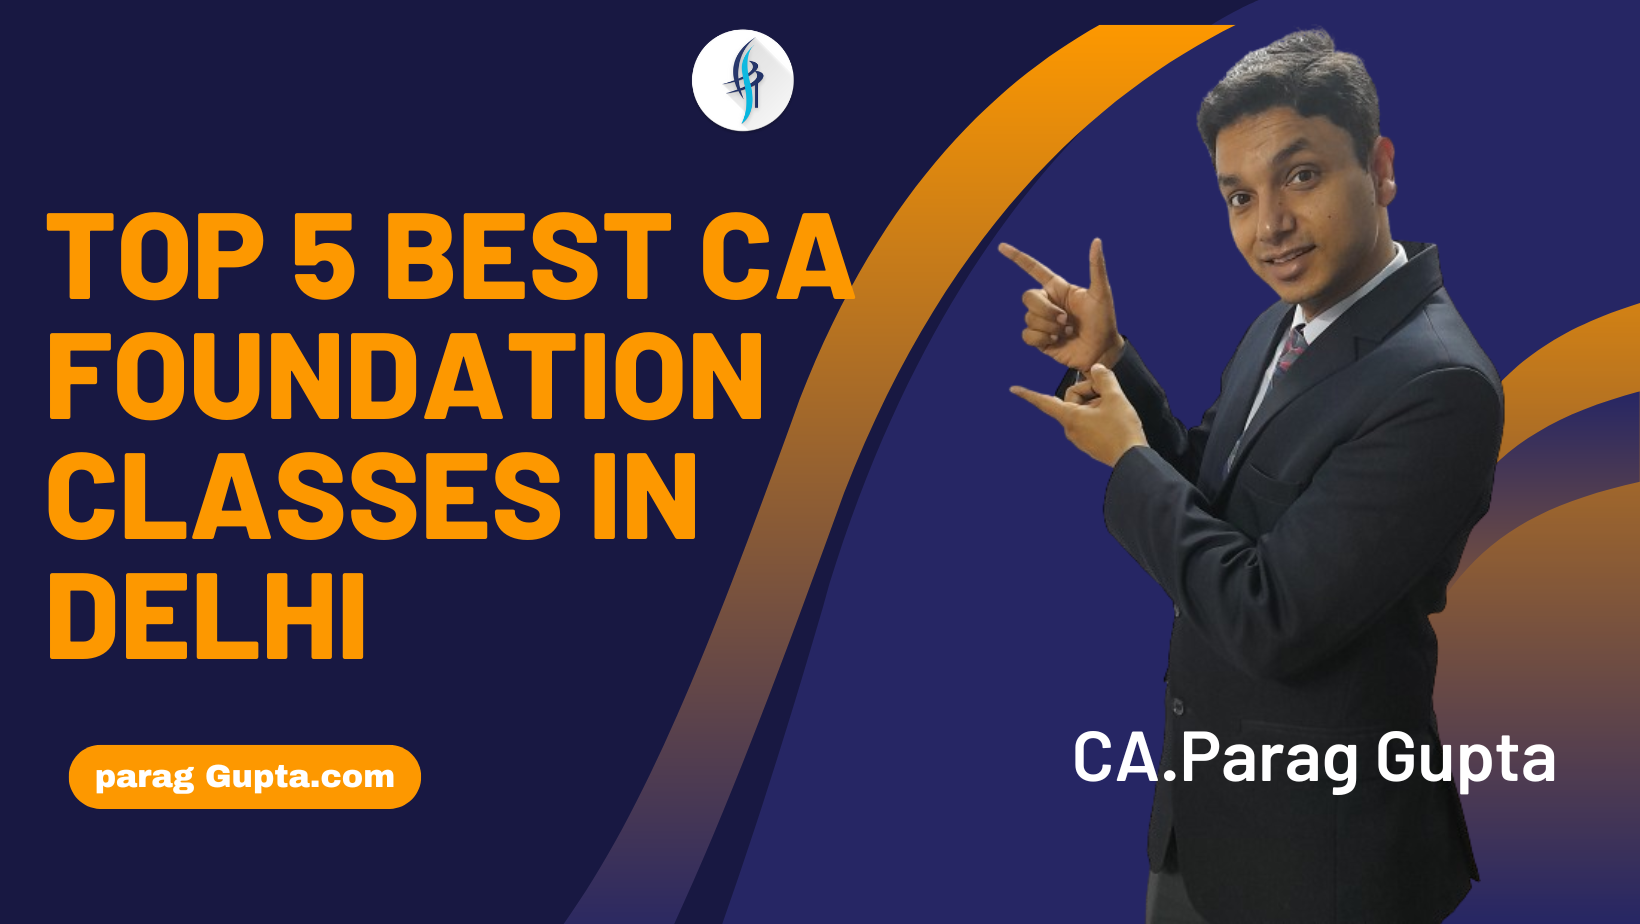 Top 5 Best CA Foundation Classes in Delhi